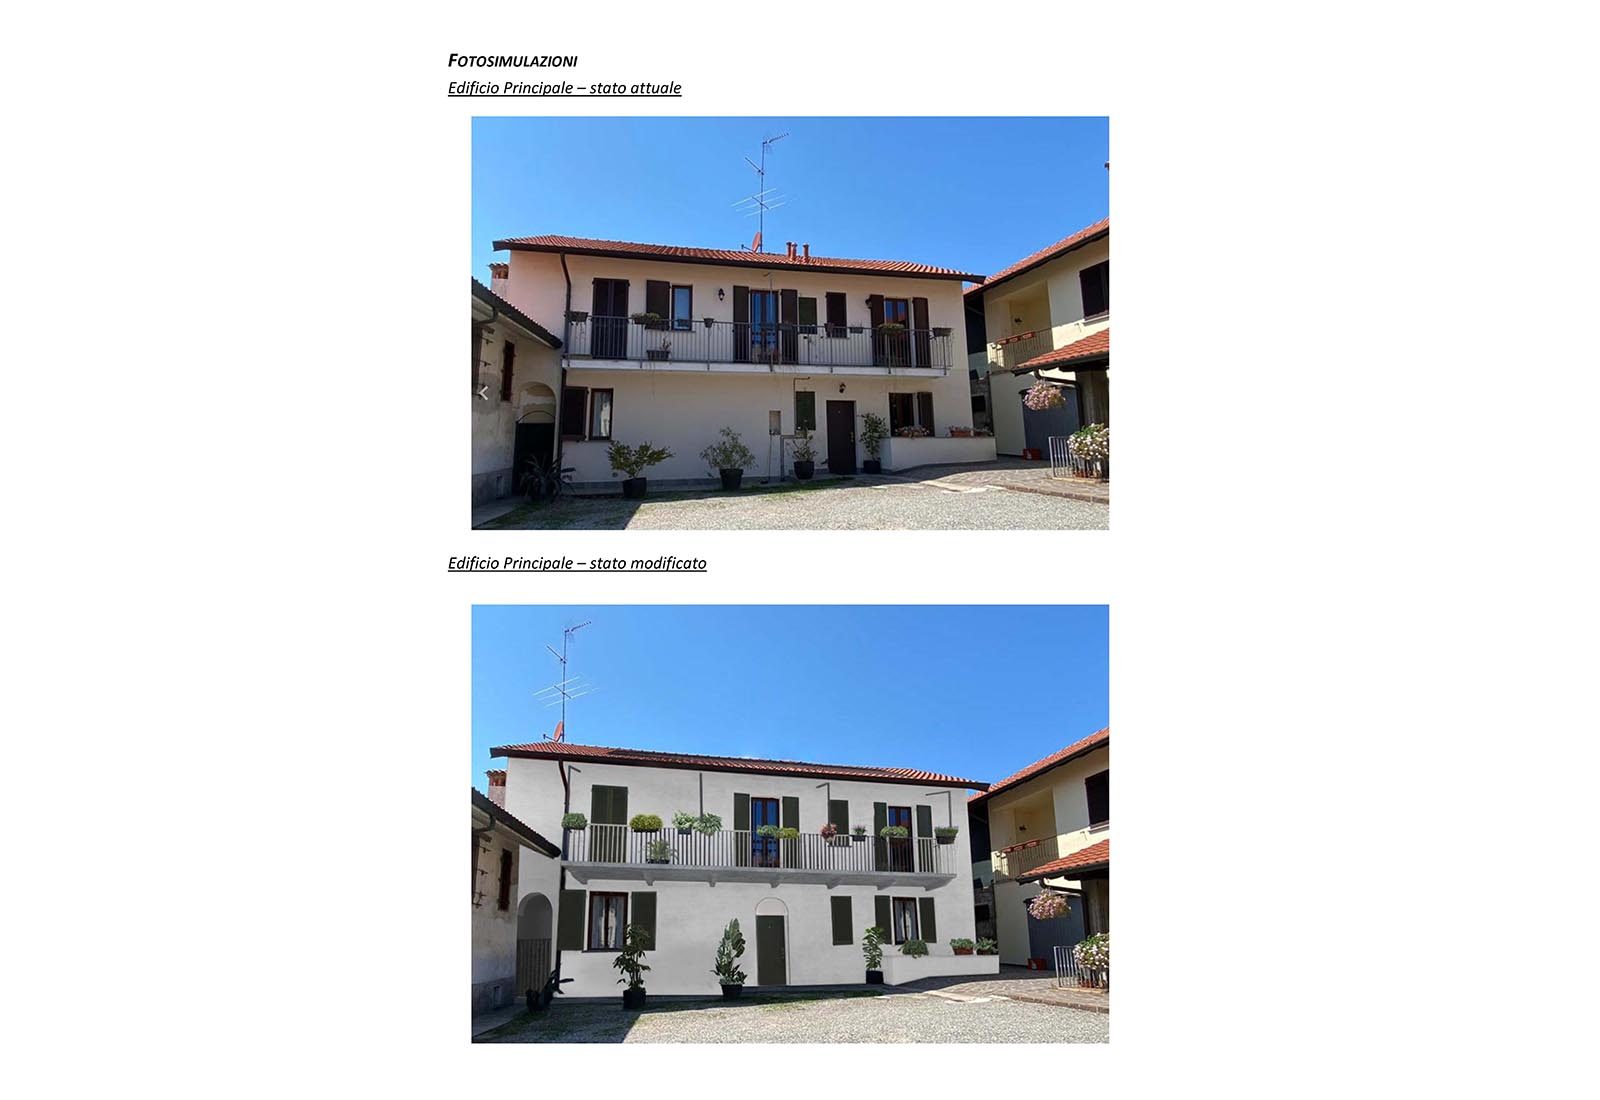 House in a courtyard in Bernate Ticino - Main elevation comparison status